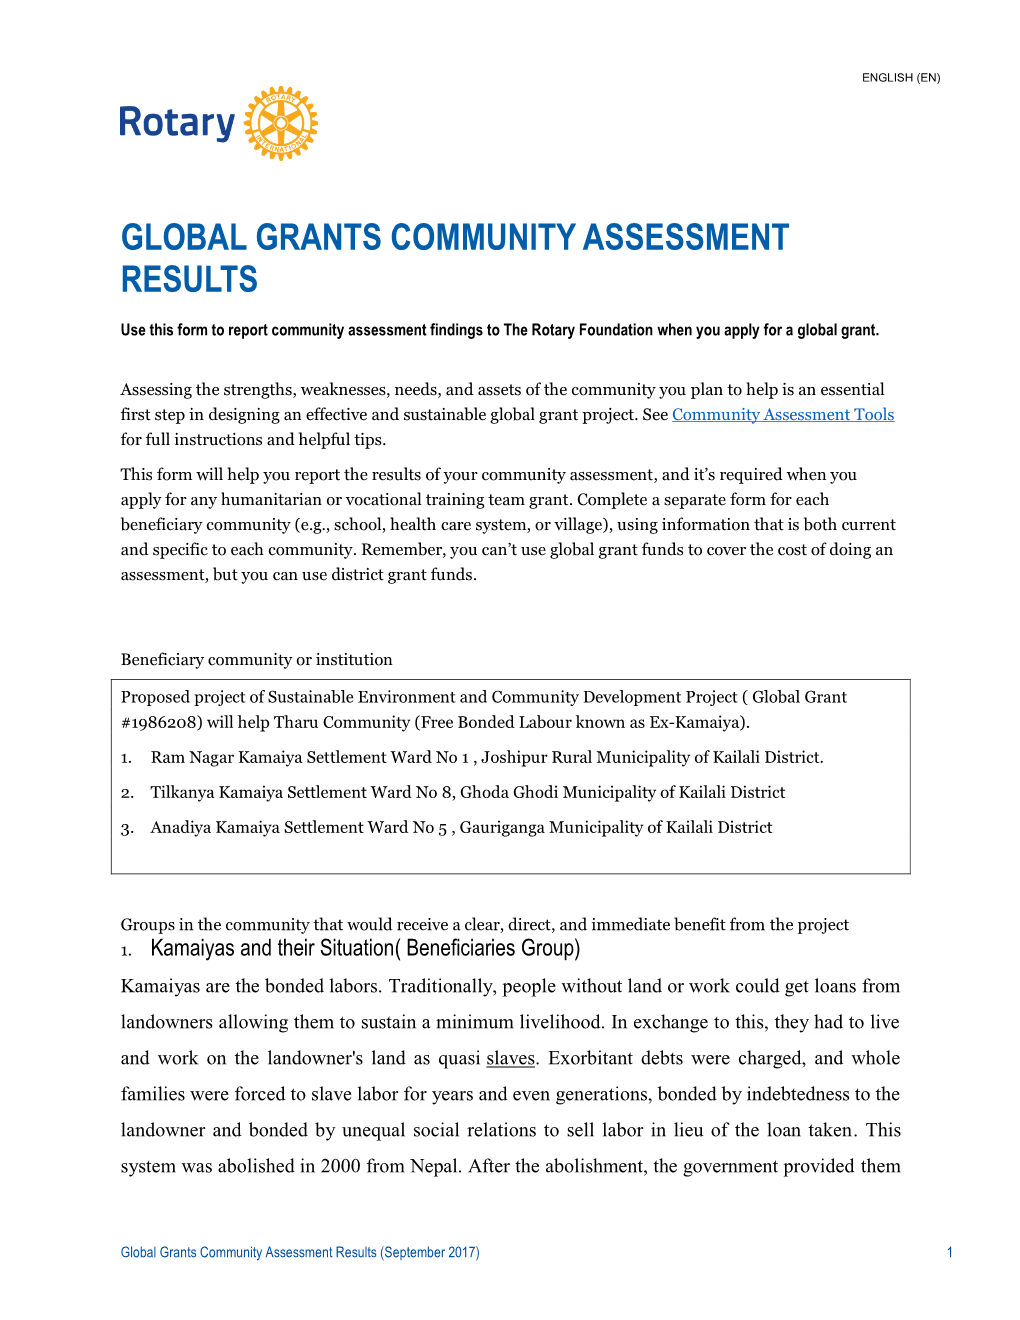 Global Grants Community Assessment Results